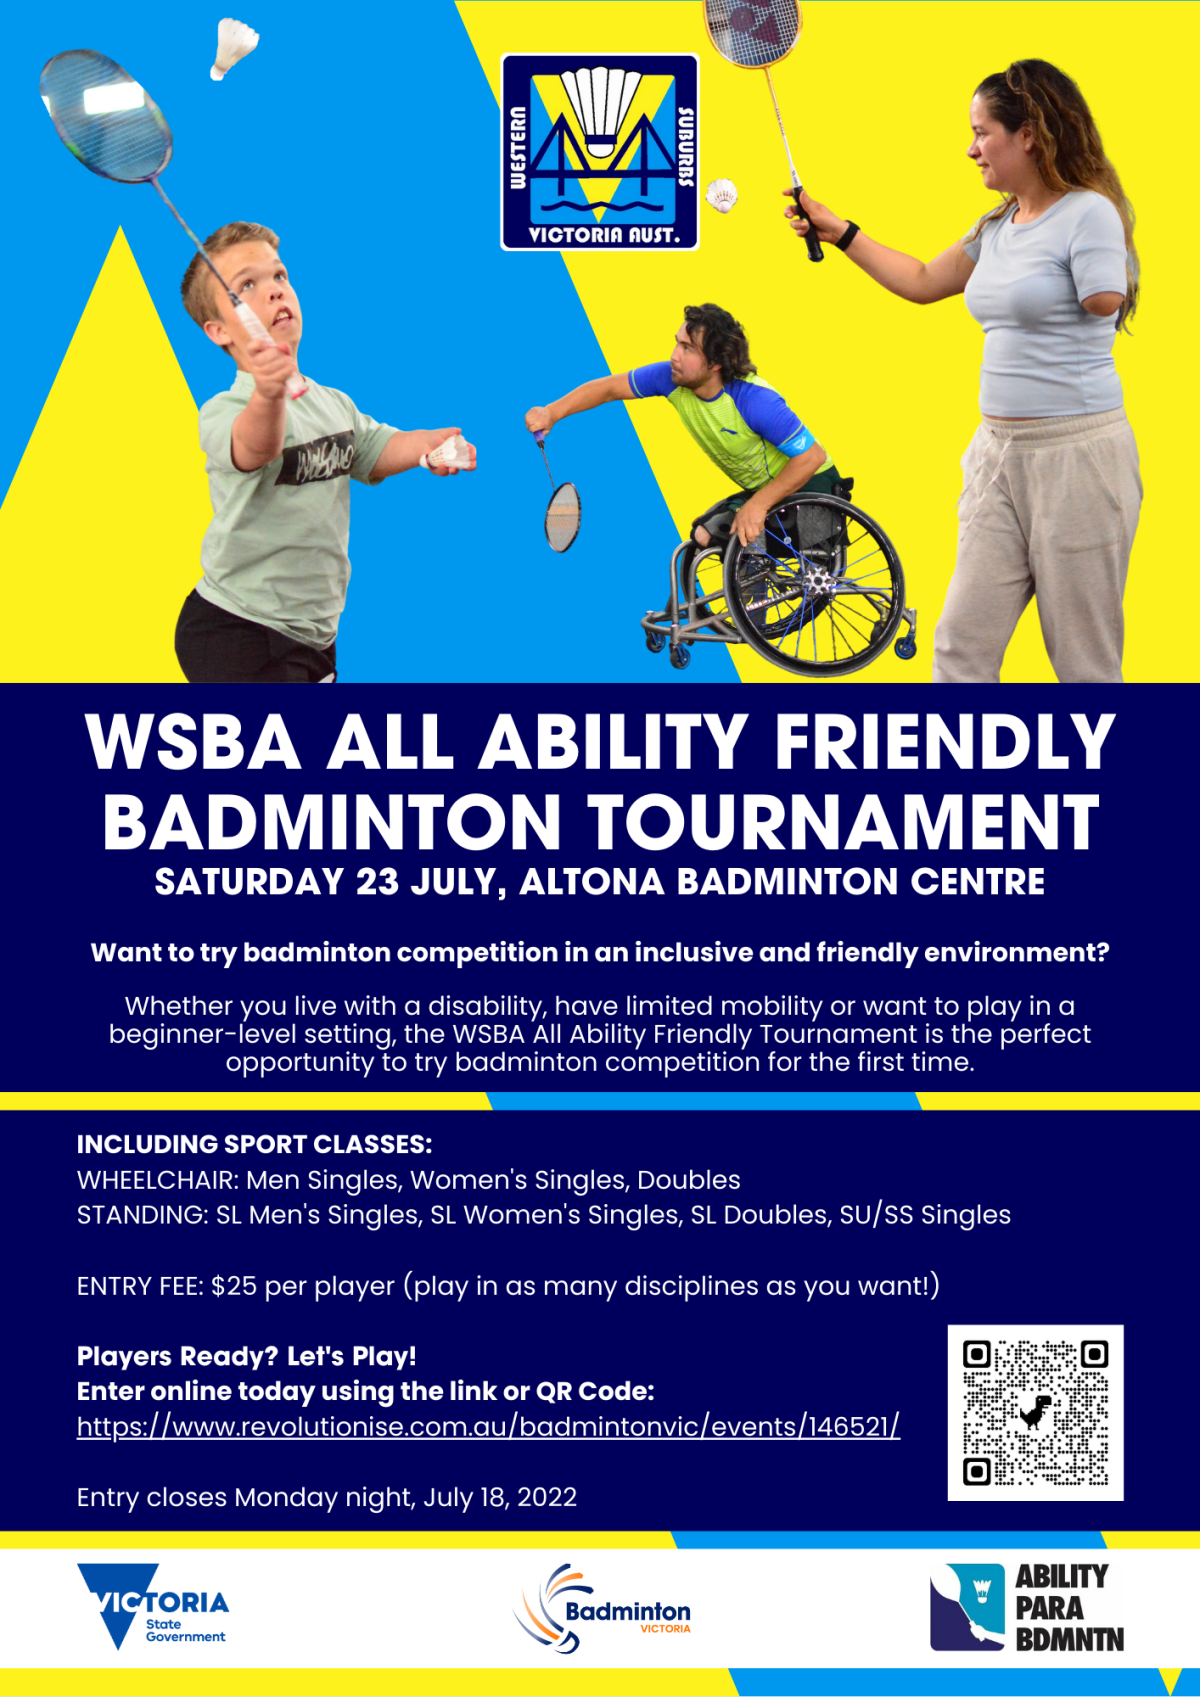 WSBA All Ability Badminton Tournament